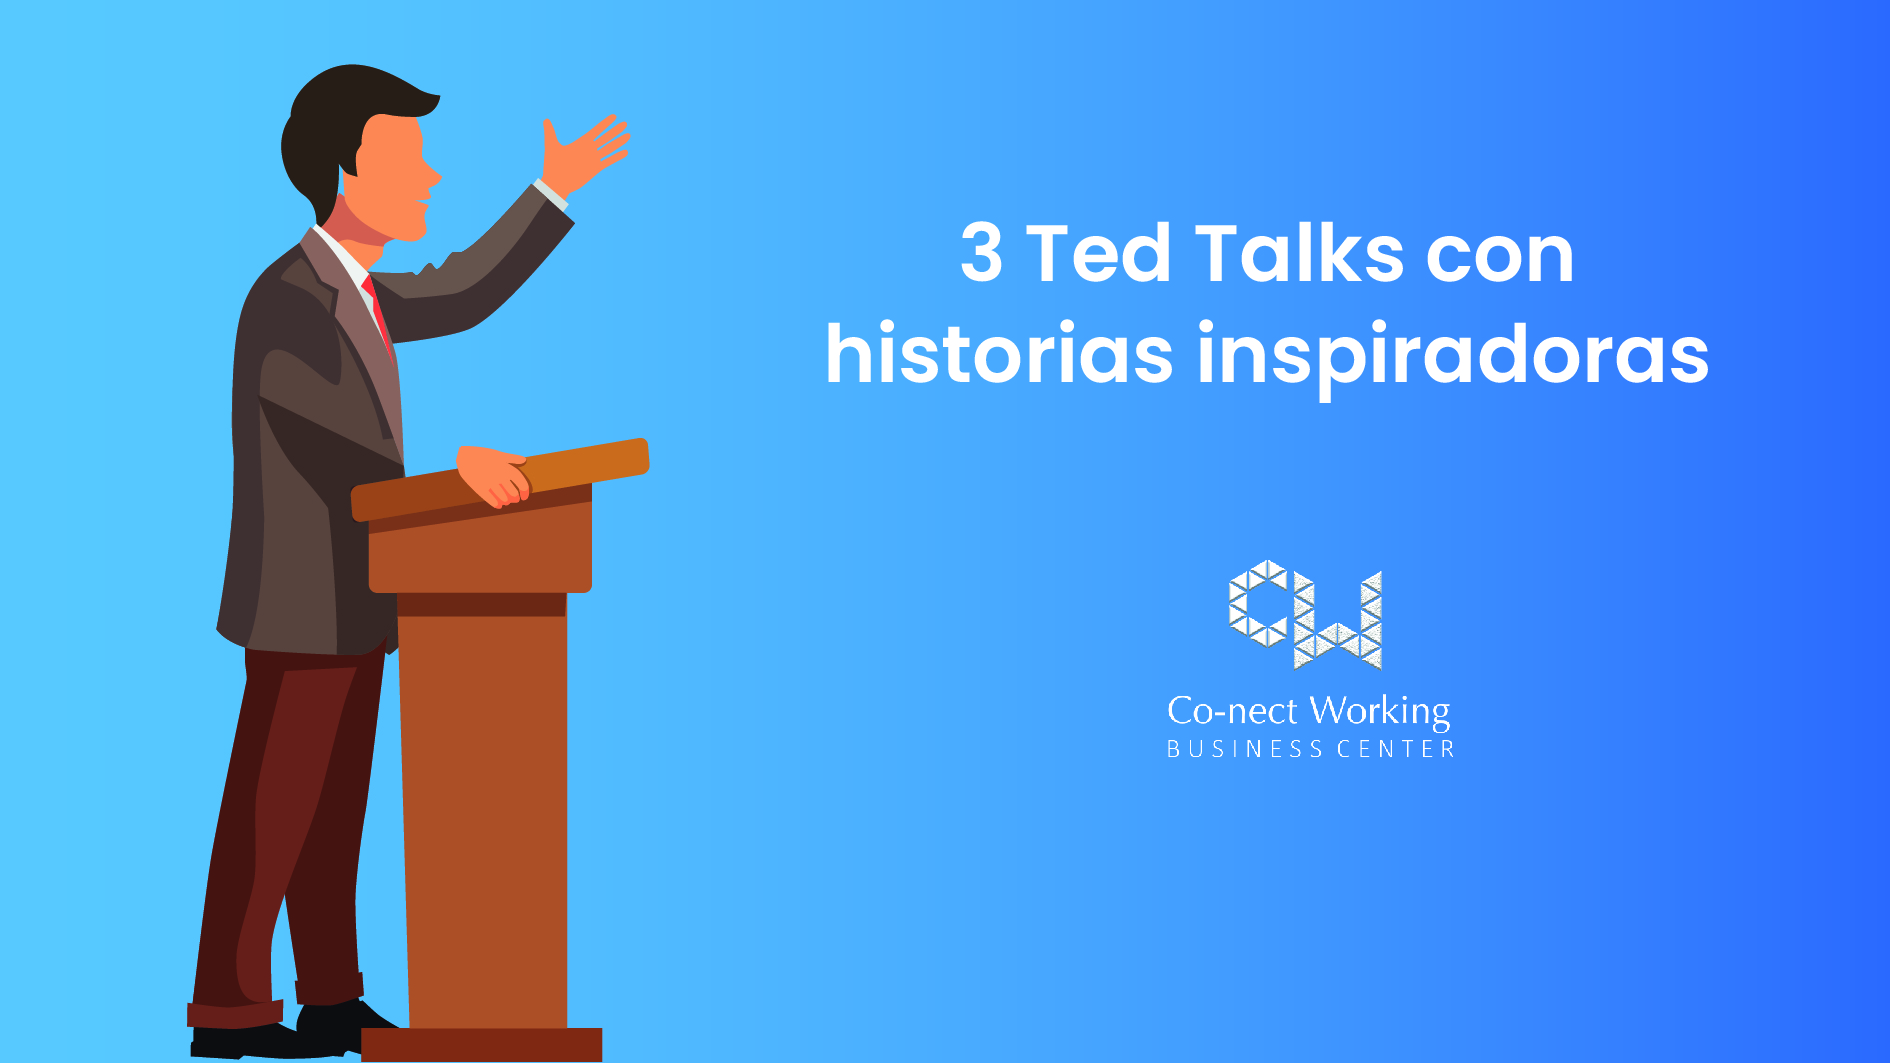 3 TED Talks con historias inspiradoras